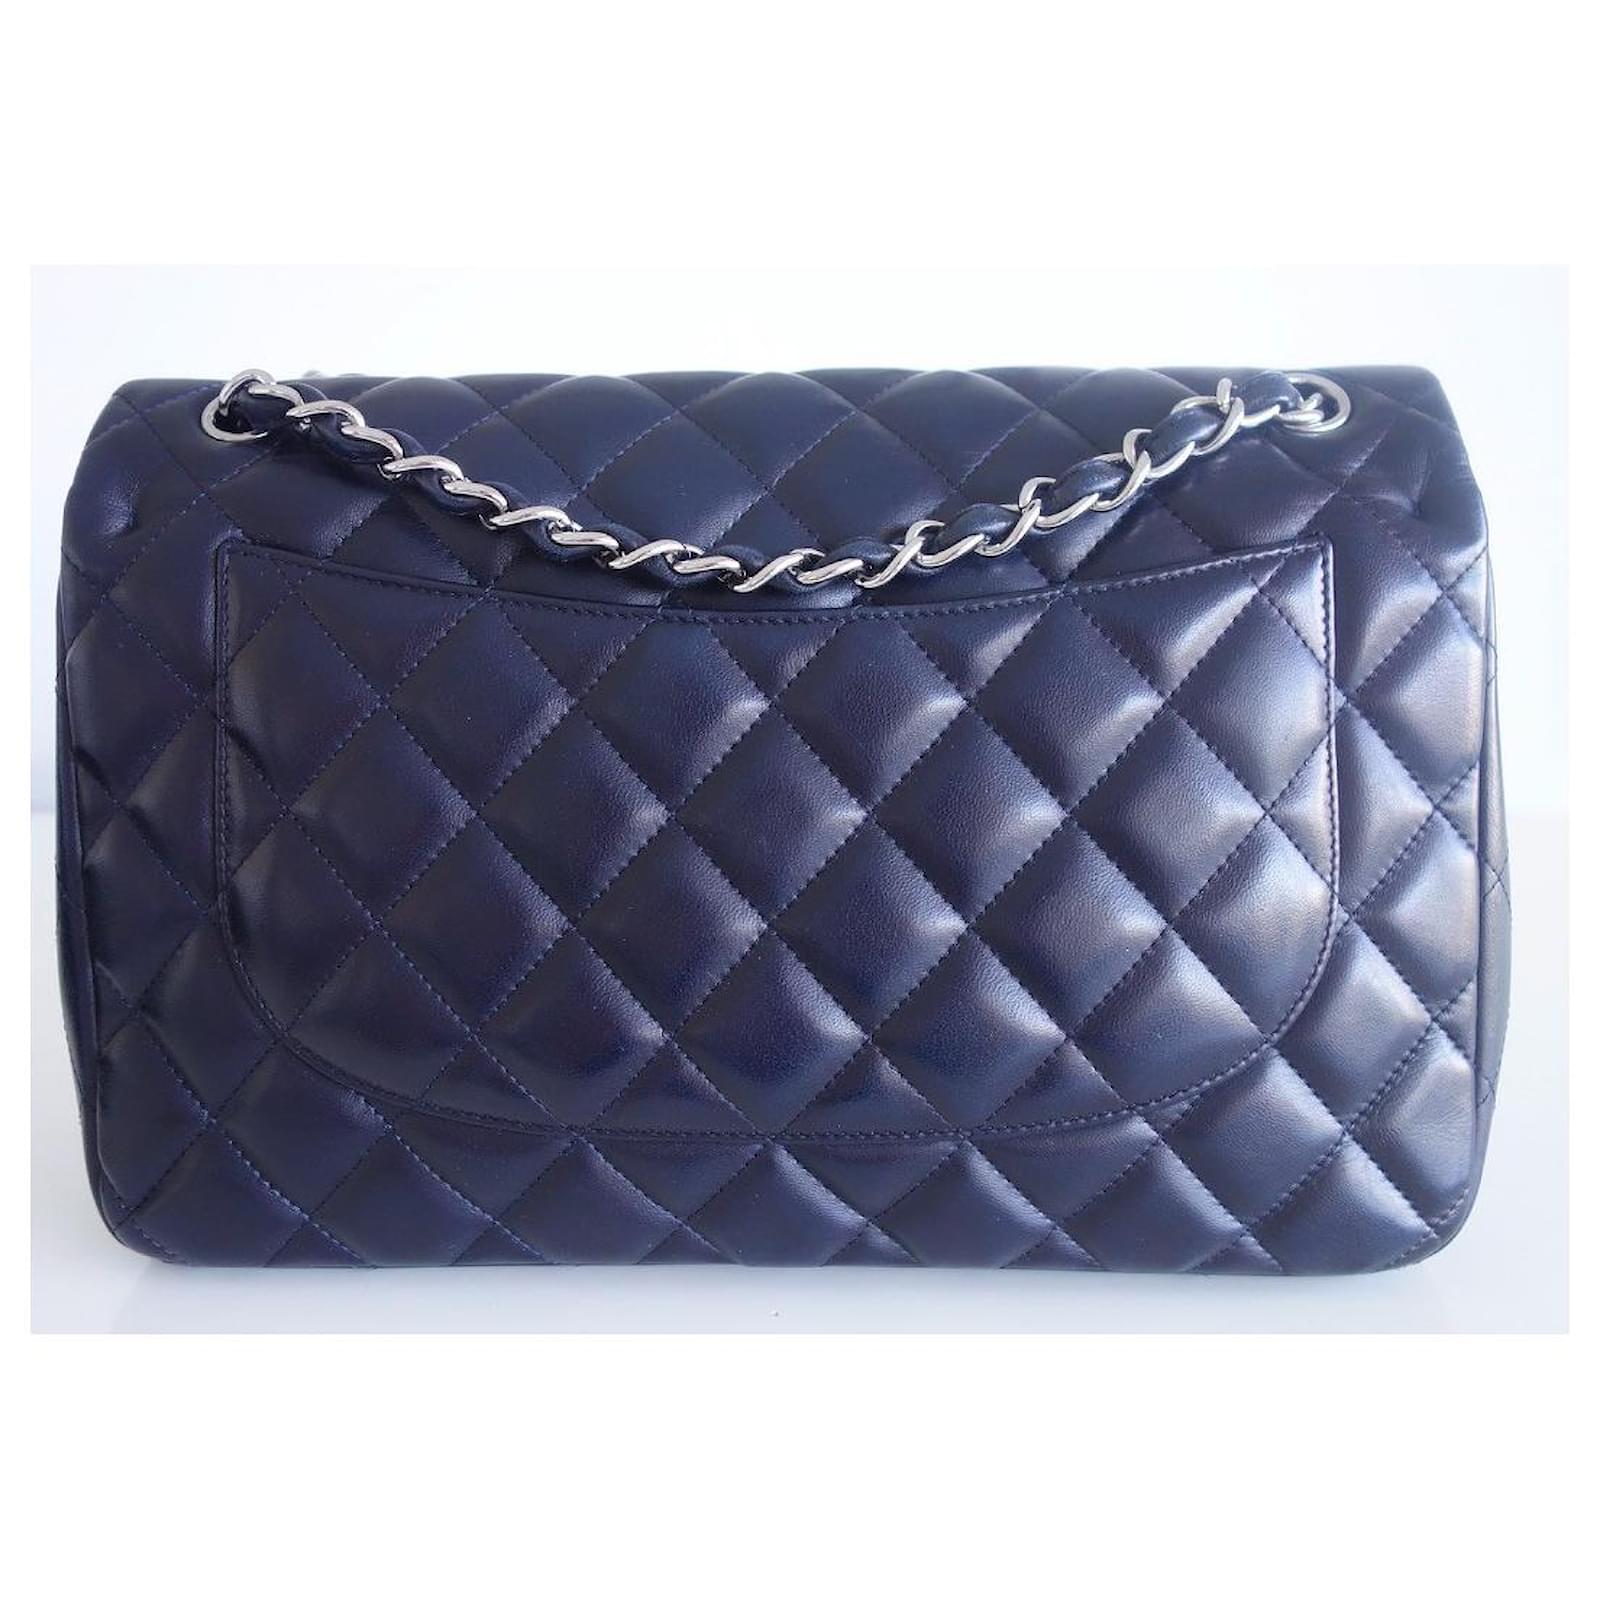 Handbags Chanel Chanel Classic GM Navy Blue Bag